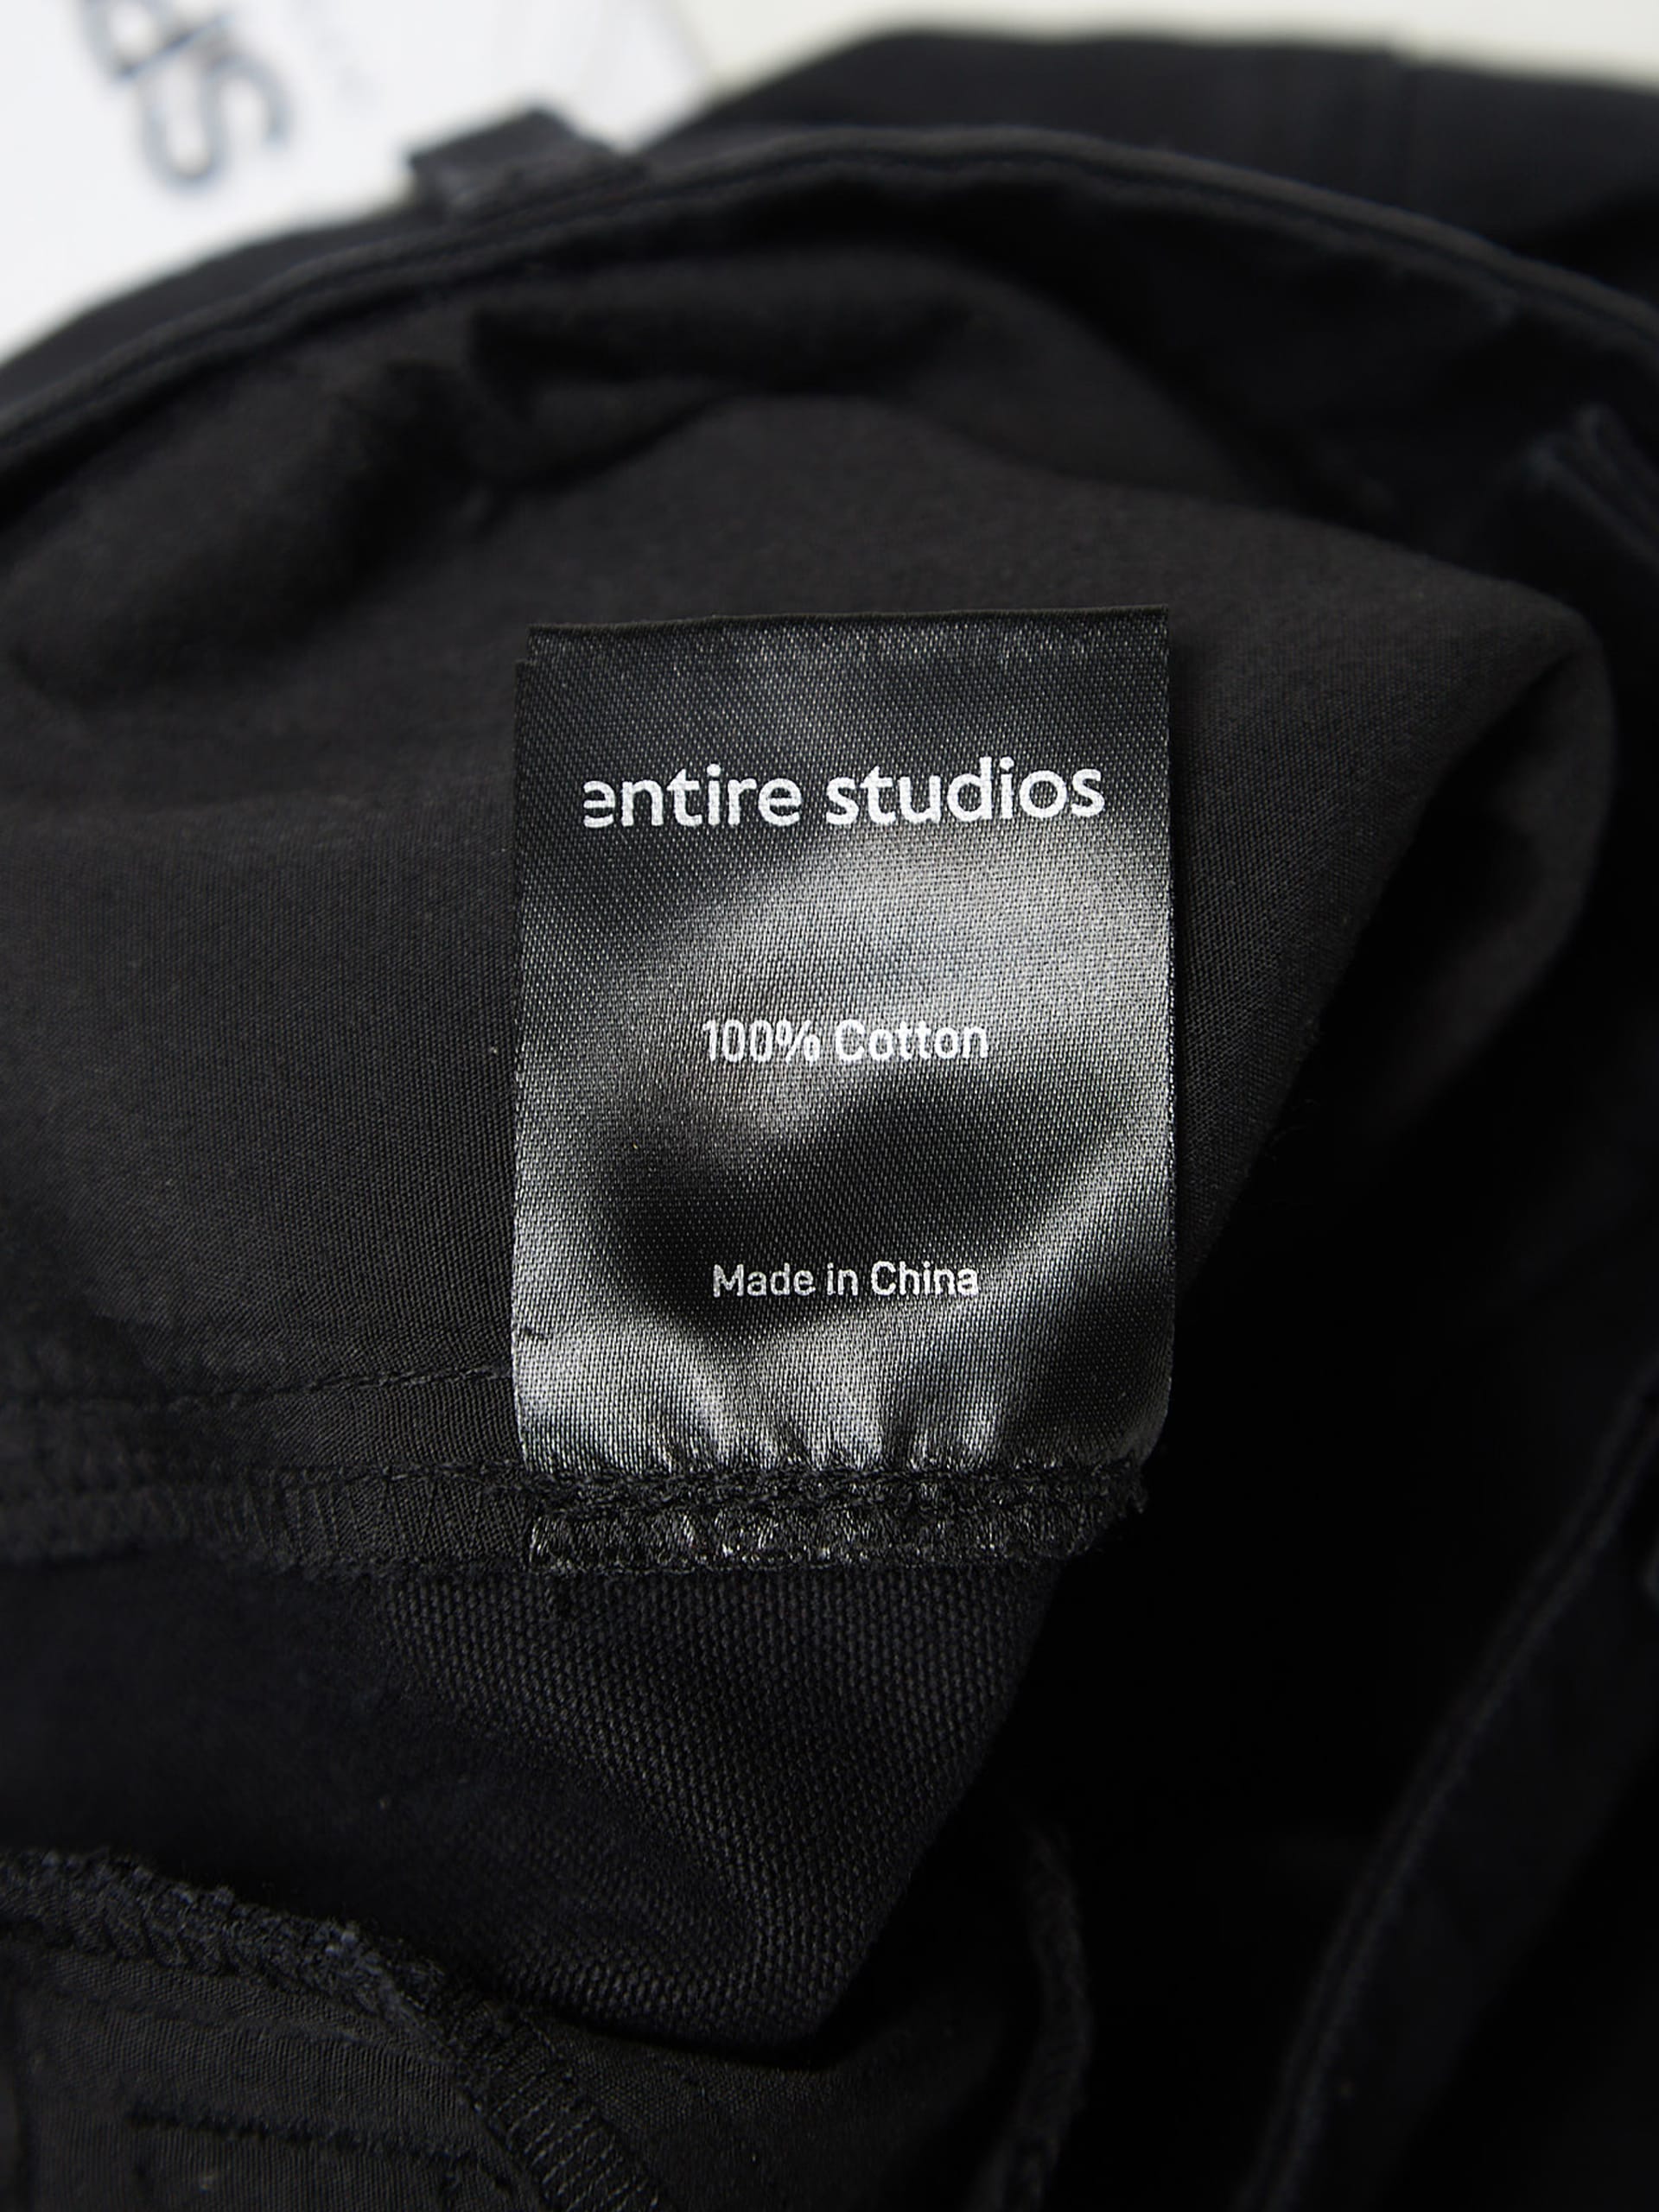 Hard cotton canvas cargo pants in black - Entire Studios